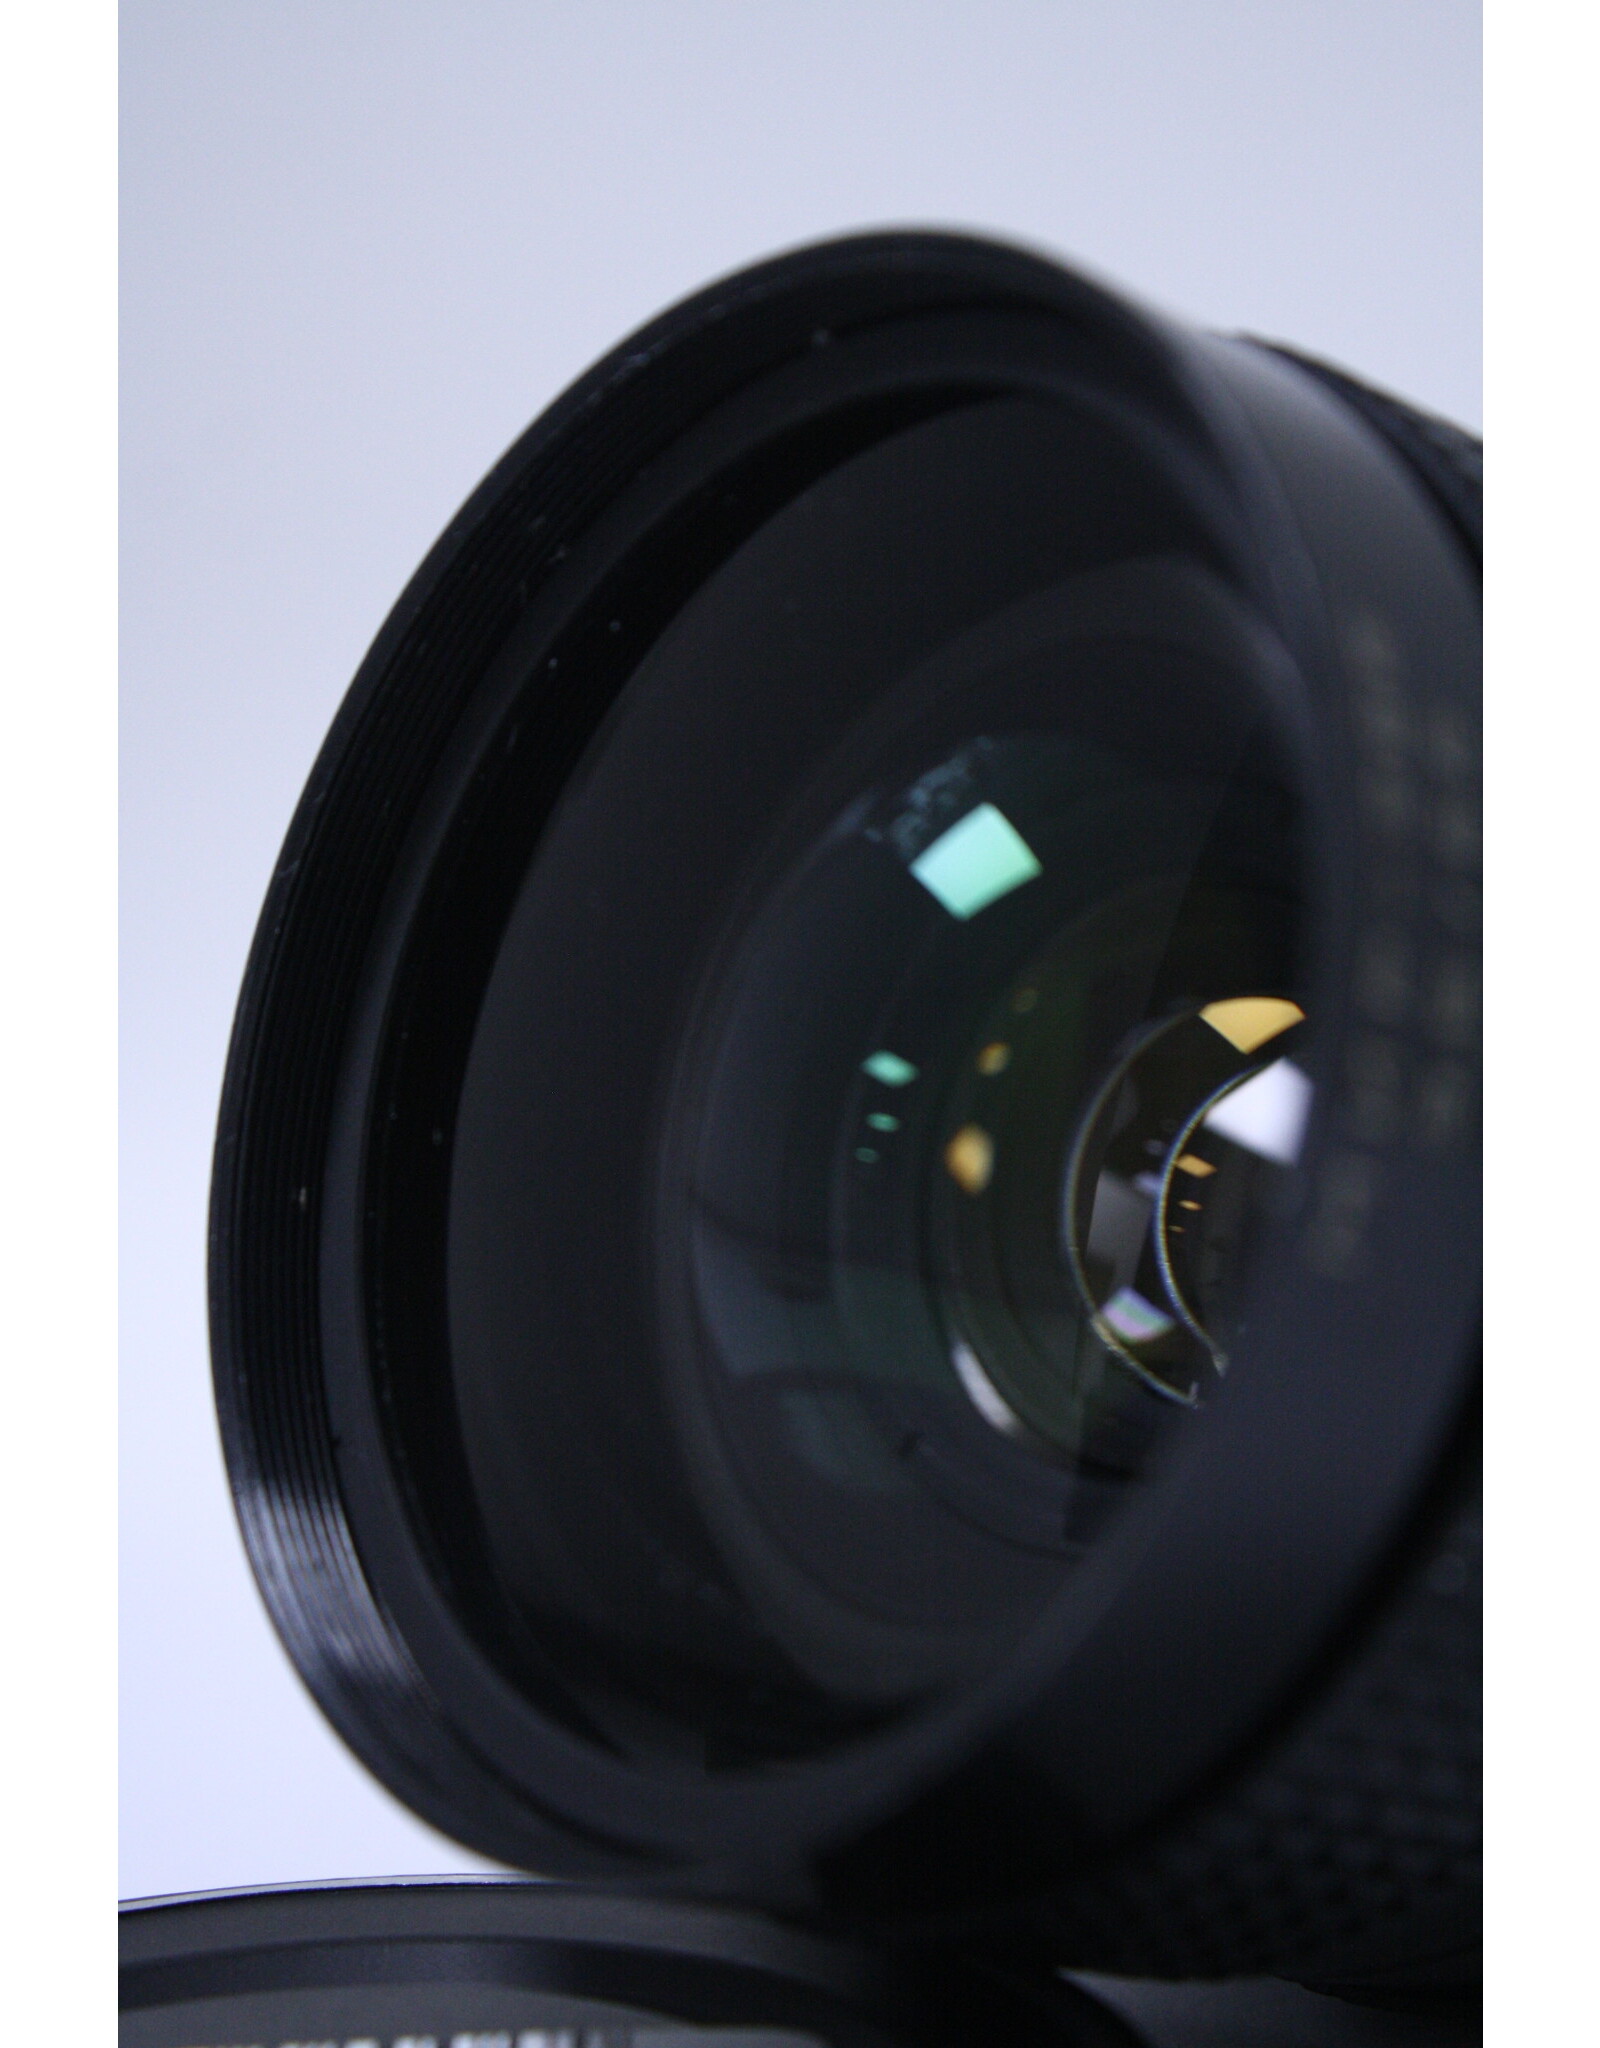 Kiev Kiev MNP 65mm F3.5 Lens for Kiev Film Cameras (Pre-Owned)